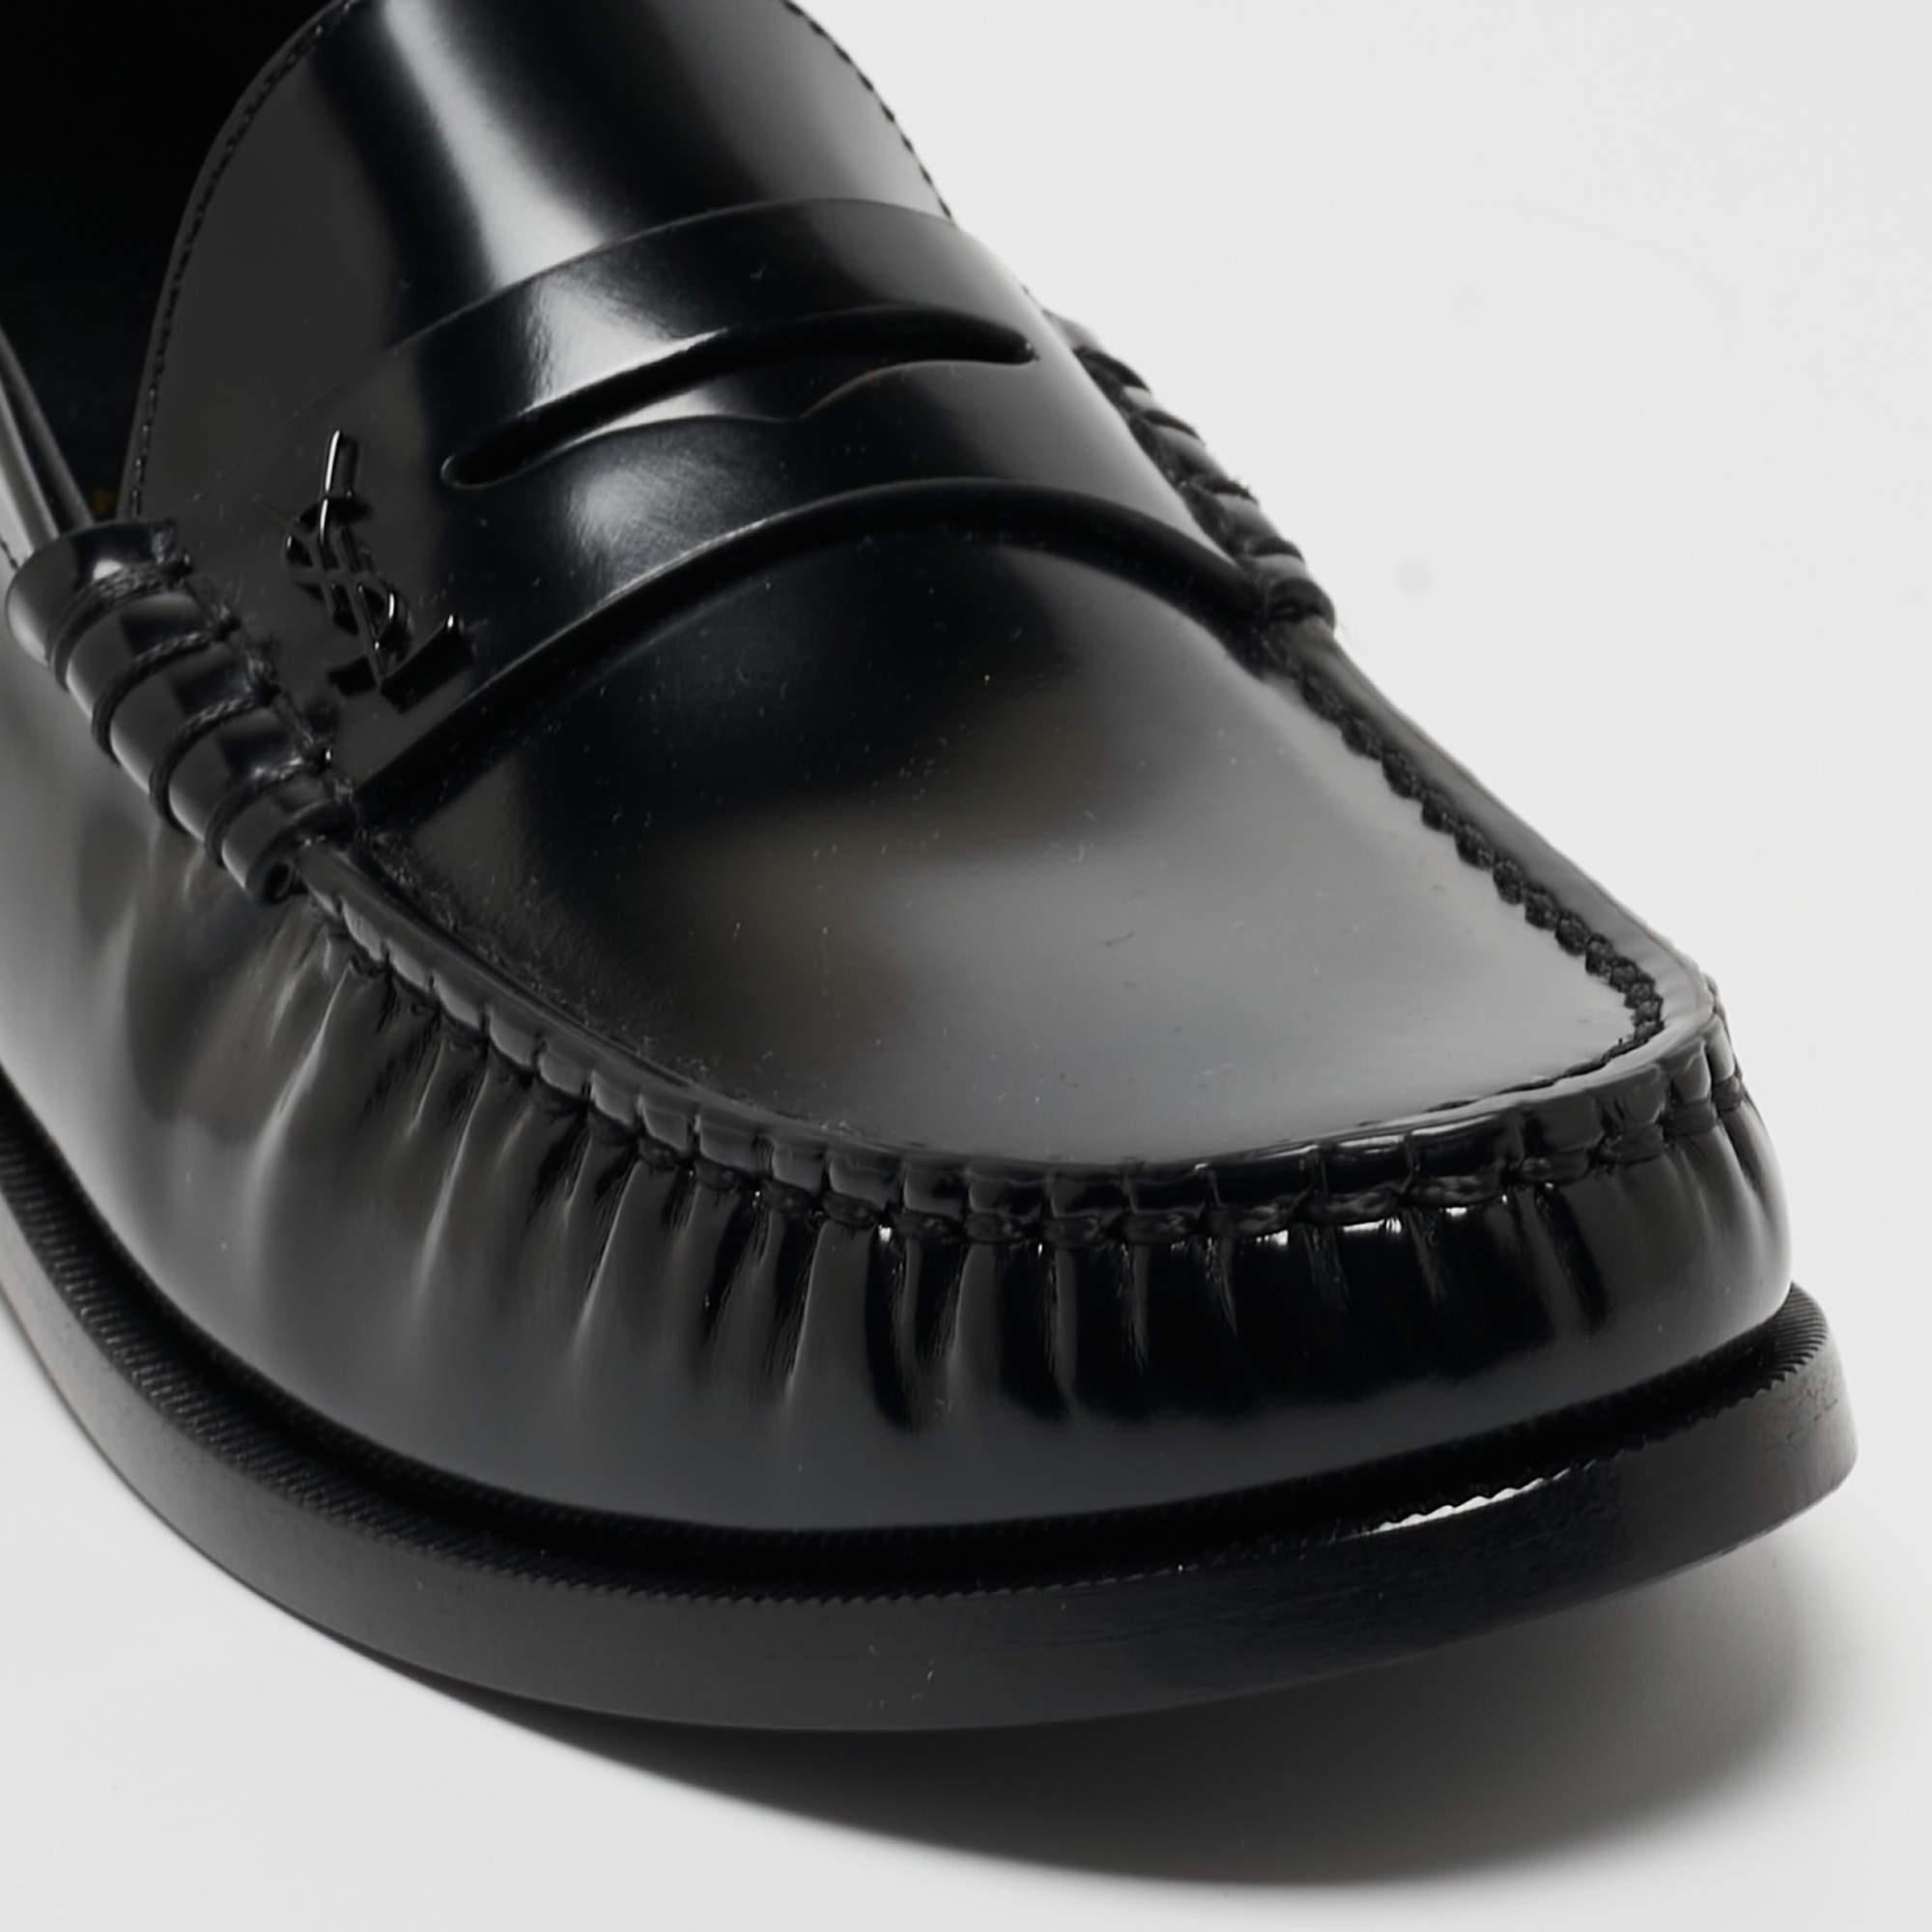 Saint Laurent Black Leather Penny Slip On Loafers Size 38 1